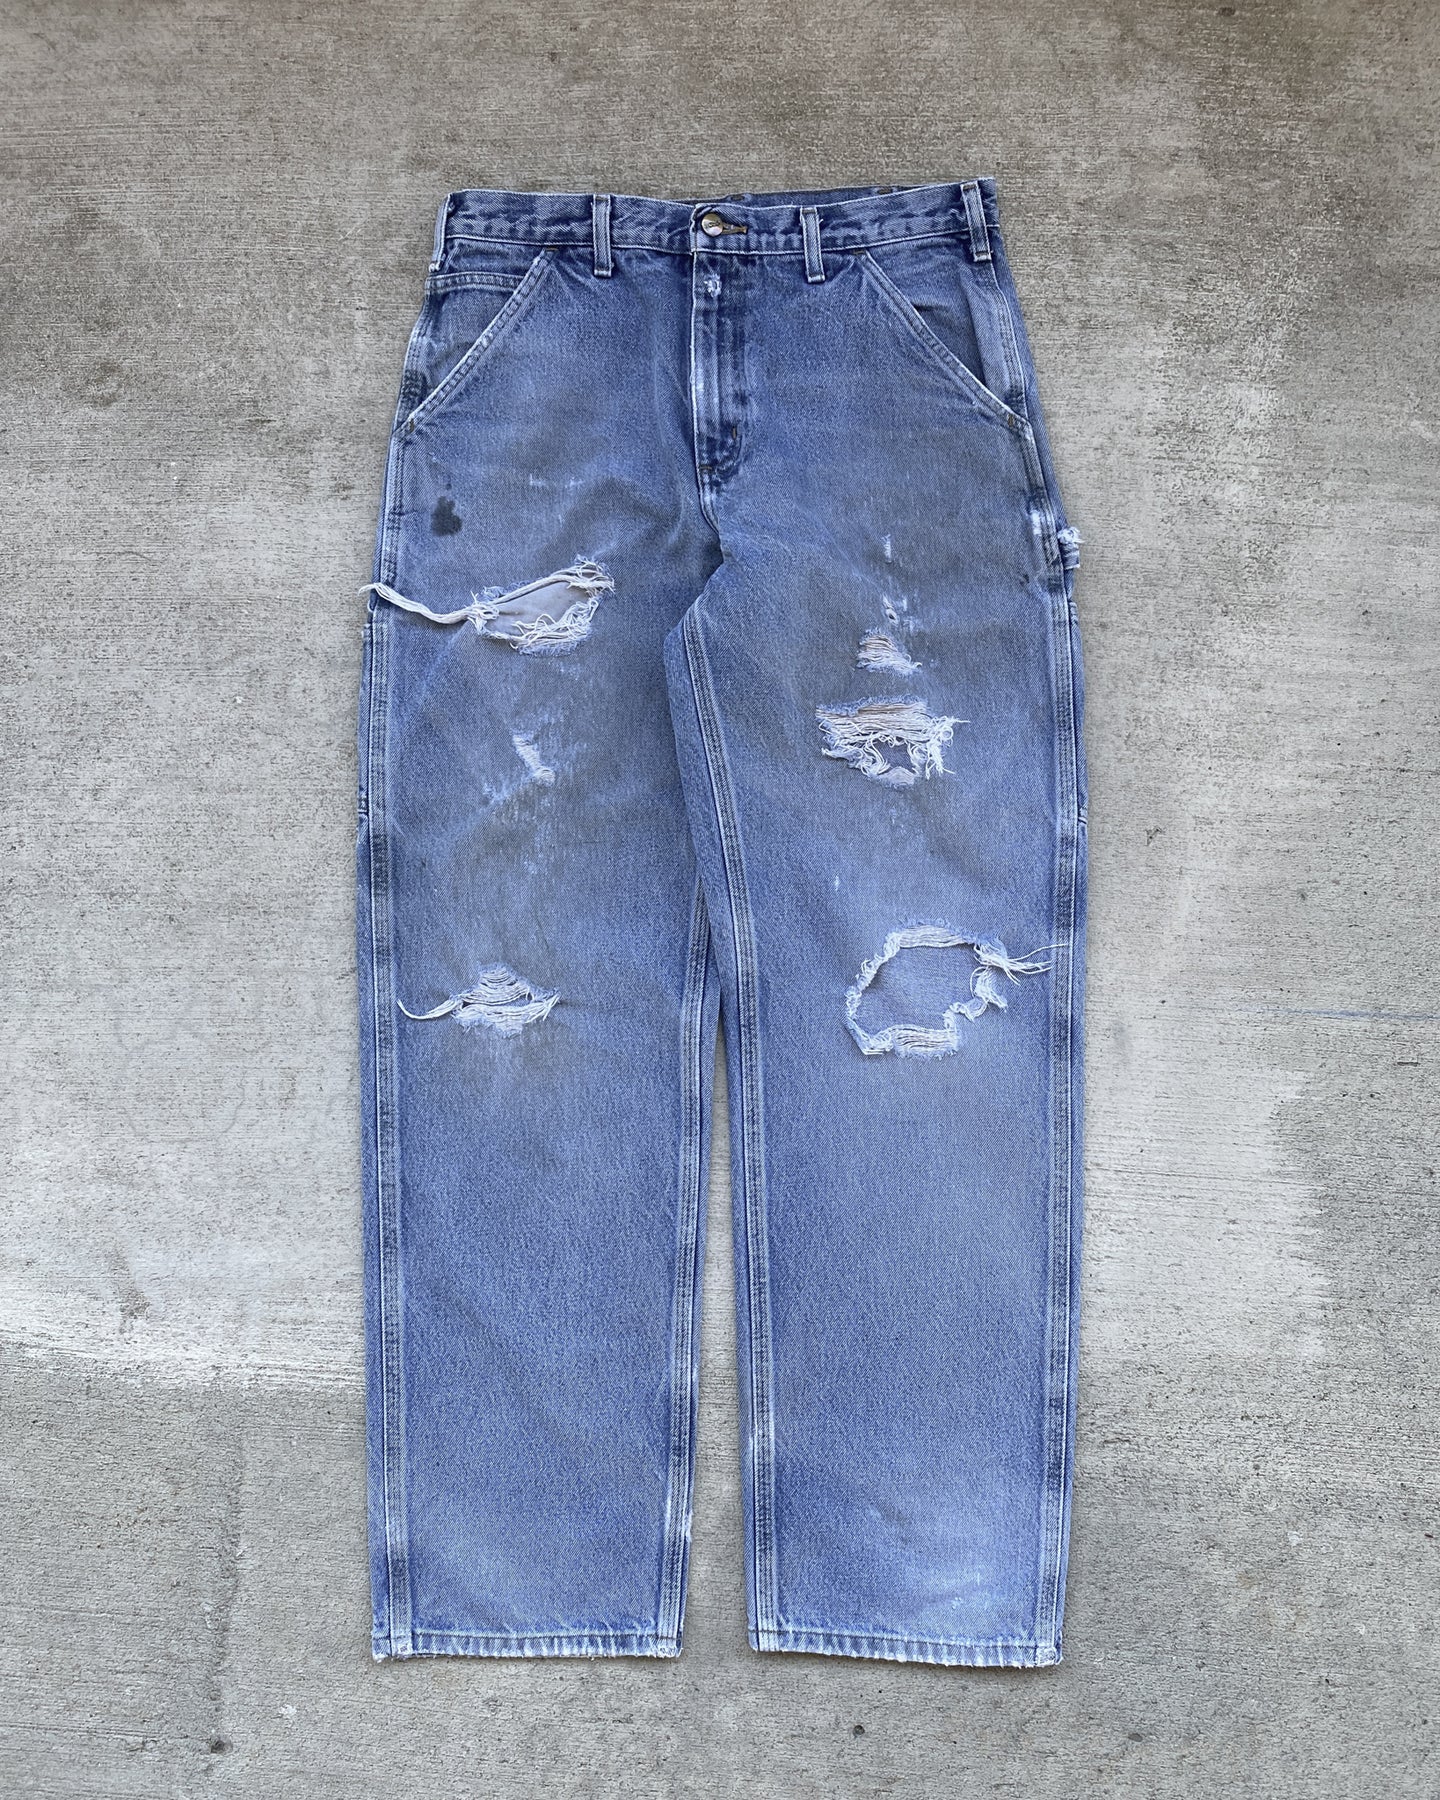 Carhartt Distressed Carpenter Jeans - Size 33 x 32